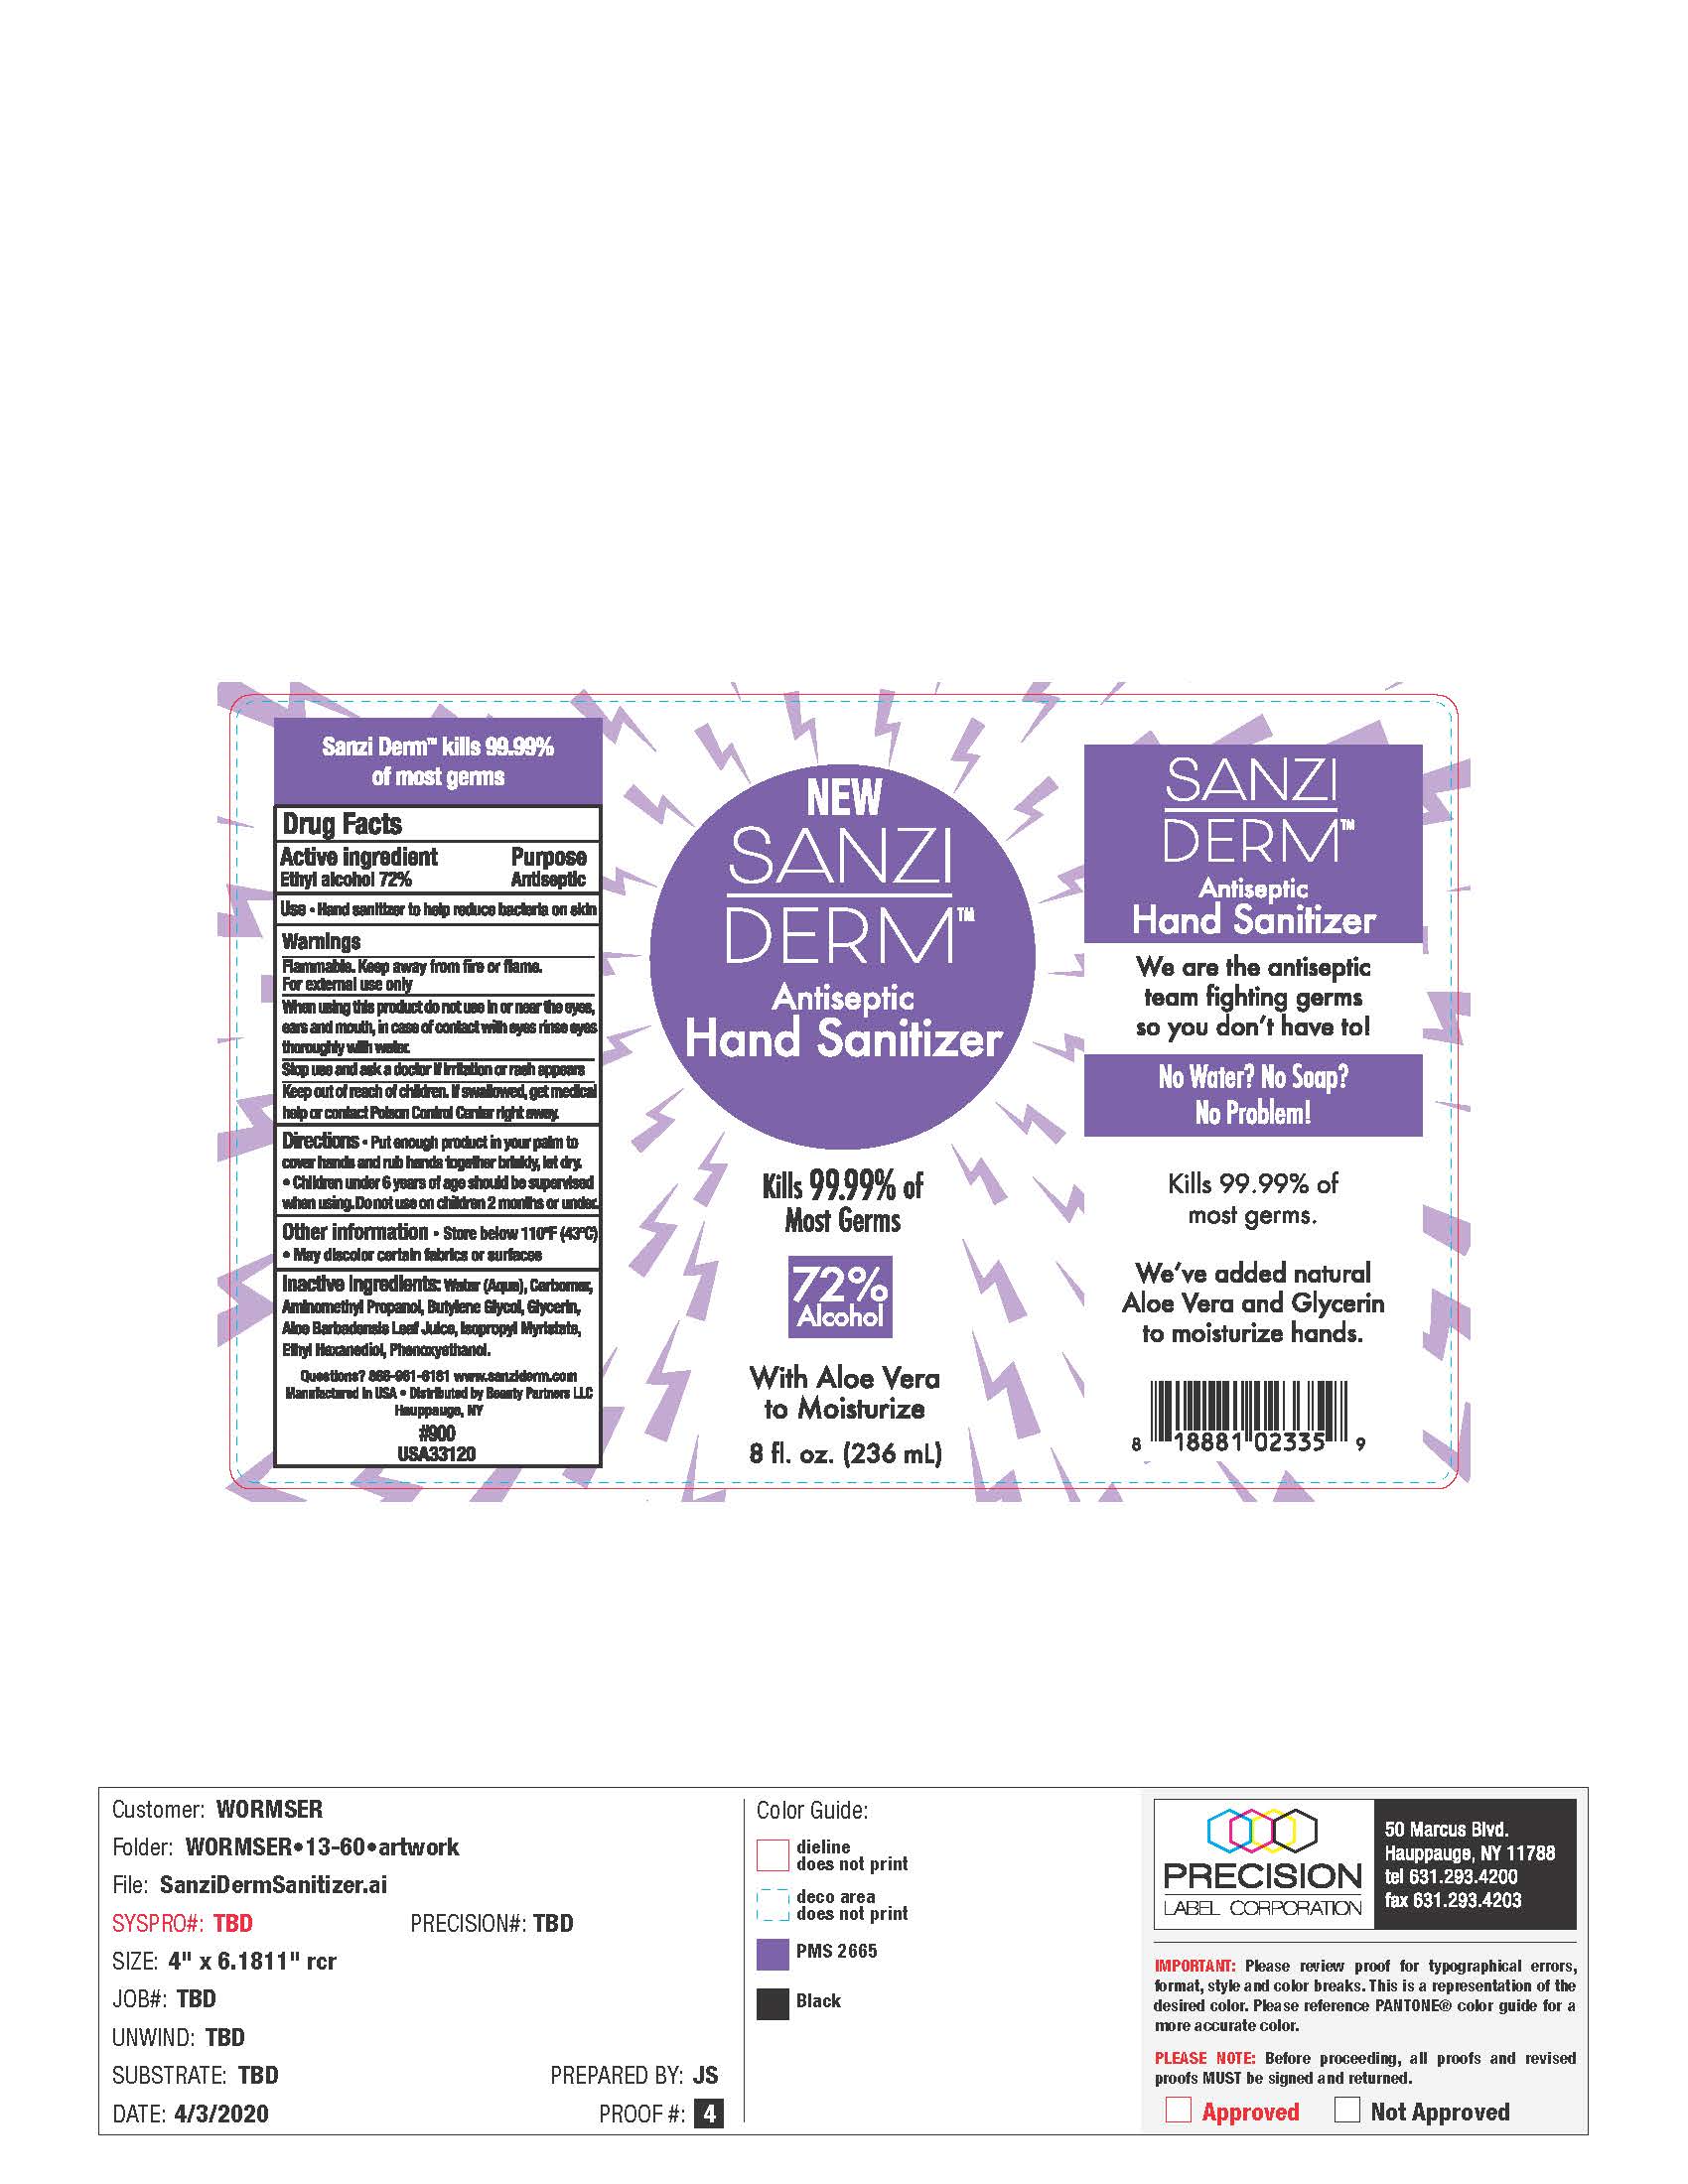 Packaging Label-SANZIDERM Antiseptic Hand Sanitizer 8OZ